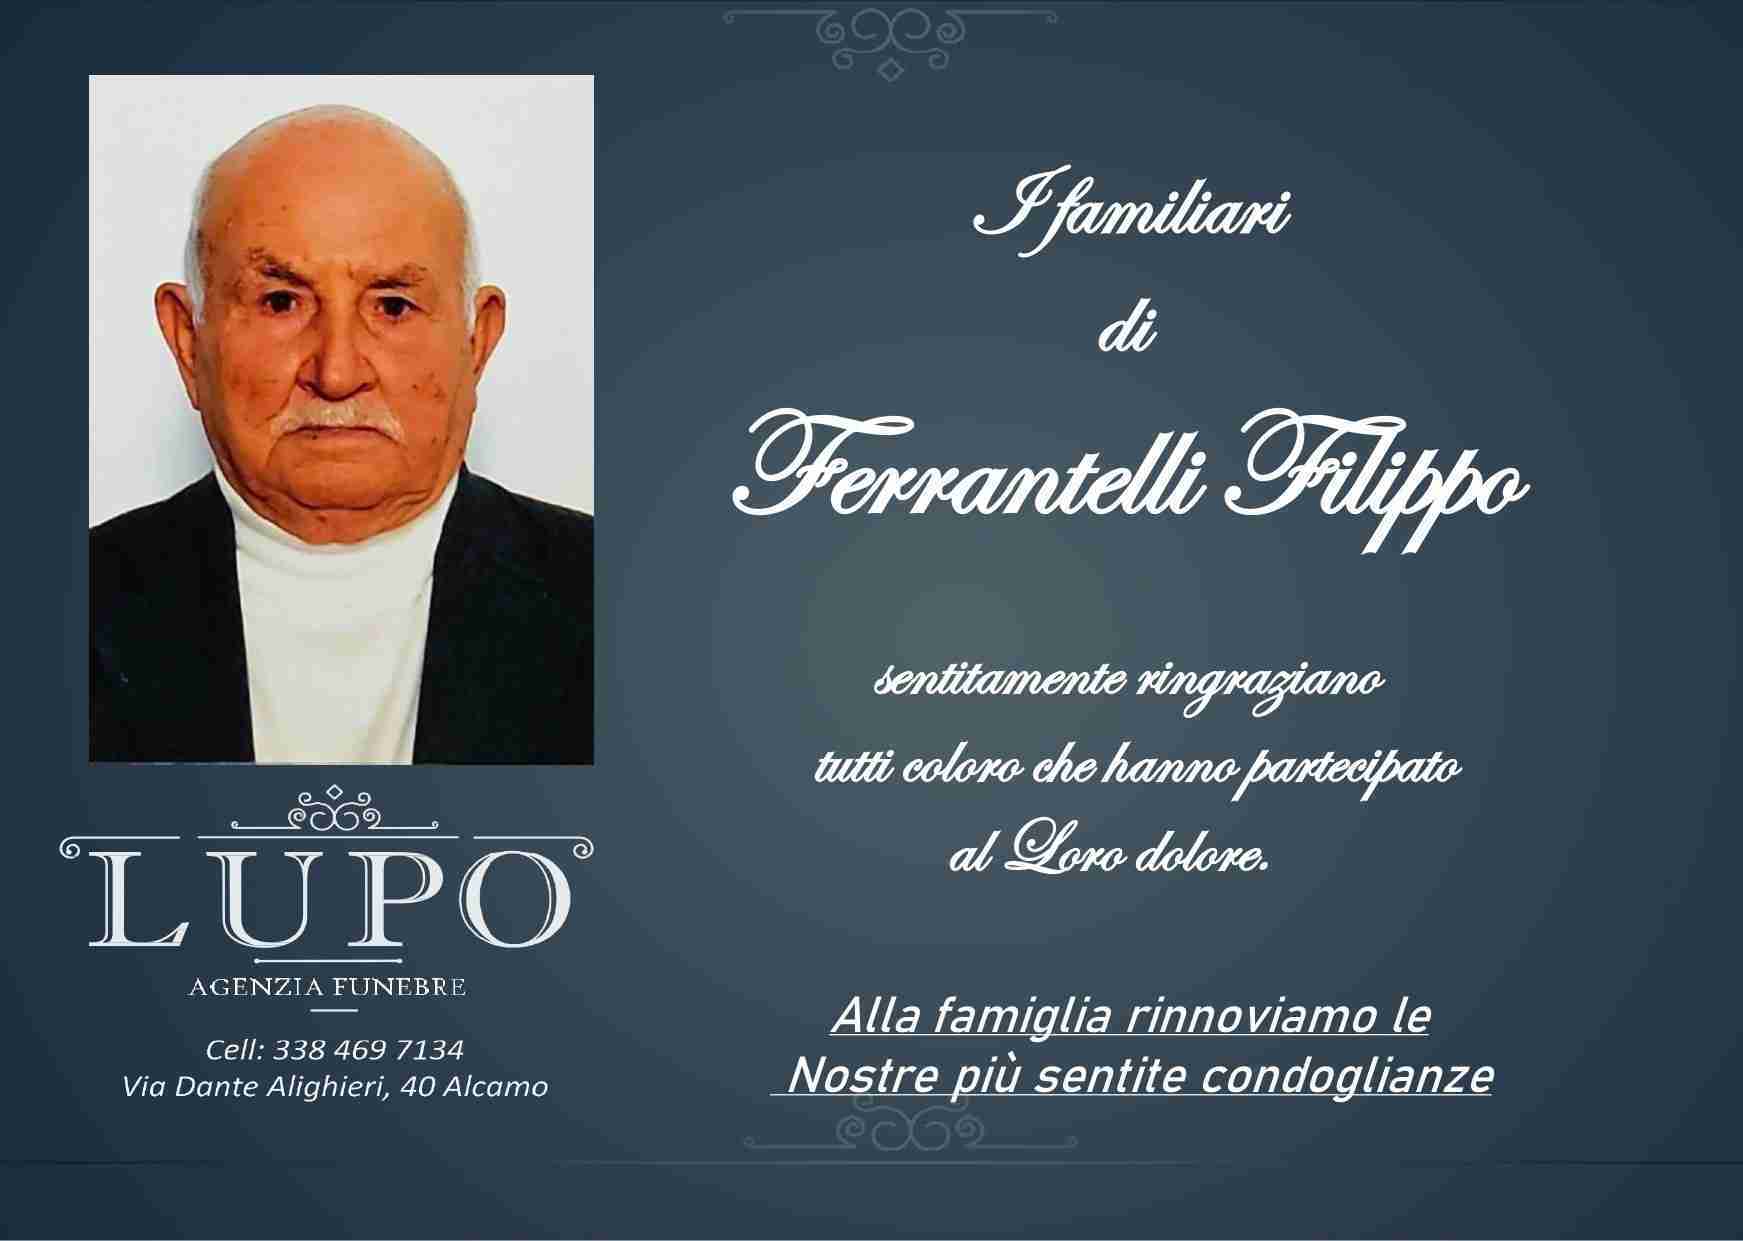 Filippo Ferrantelli